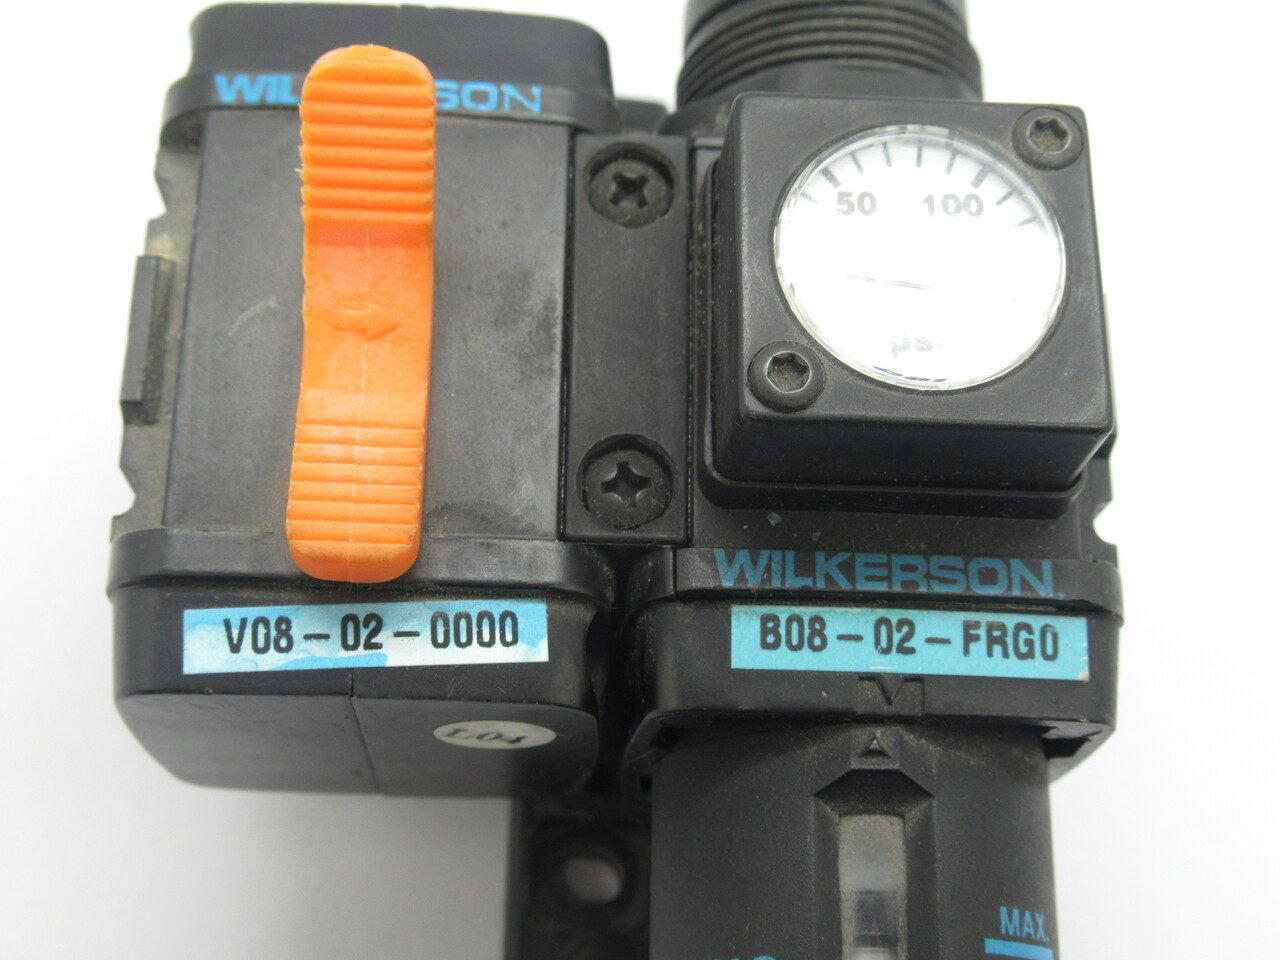 Wilkerson B08-02-FRG0 Mini Modular Assembly V08-02-000 0-160Psi COS DMG USED